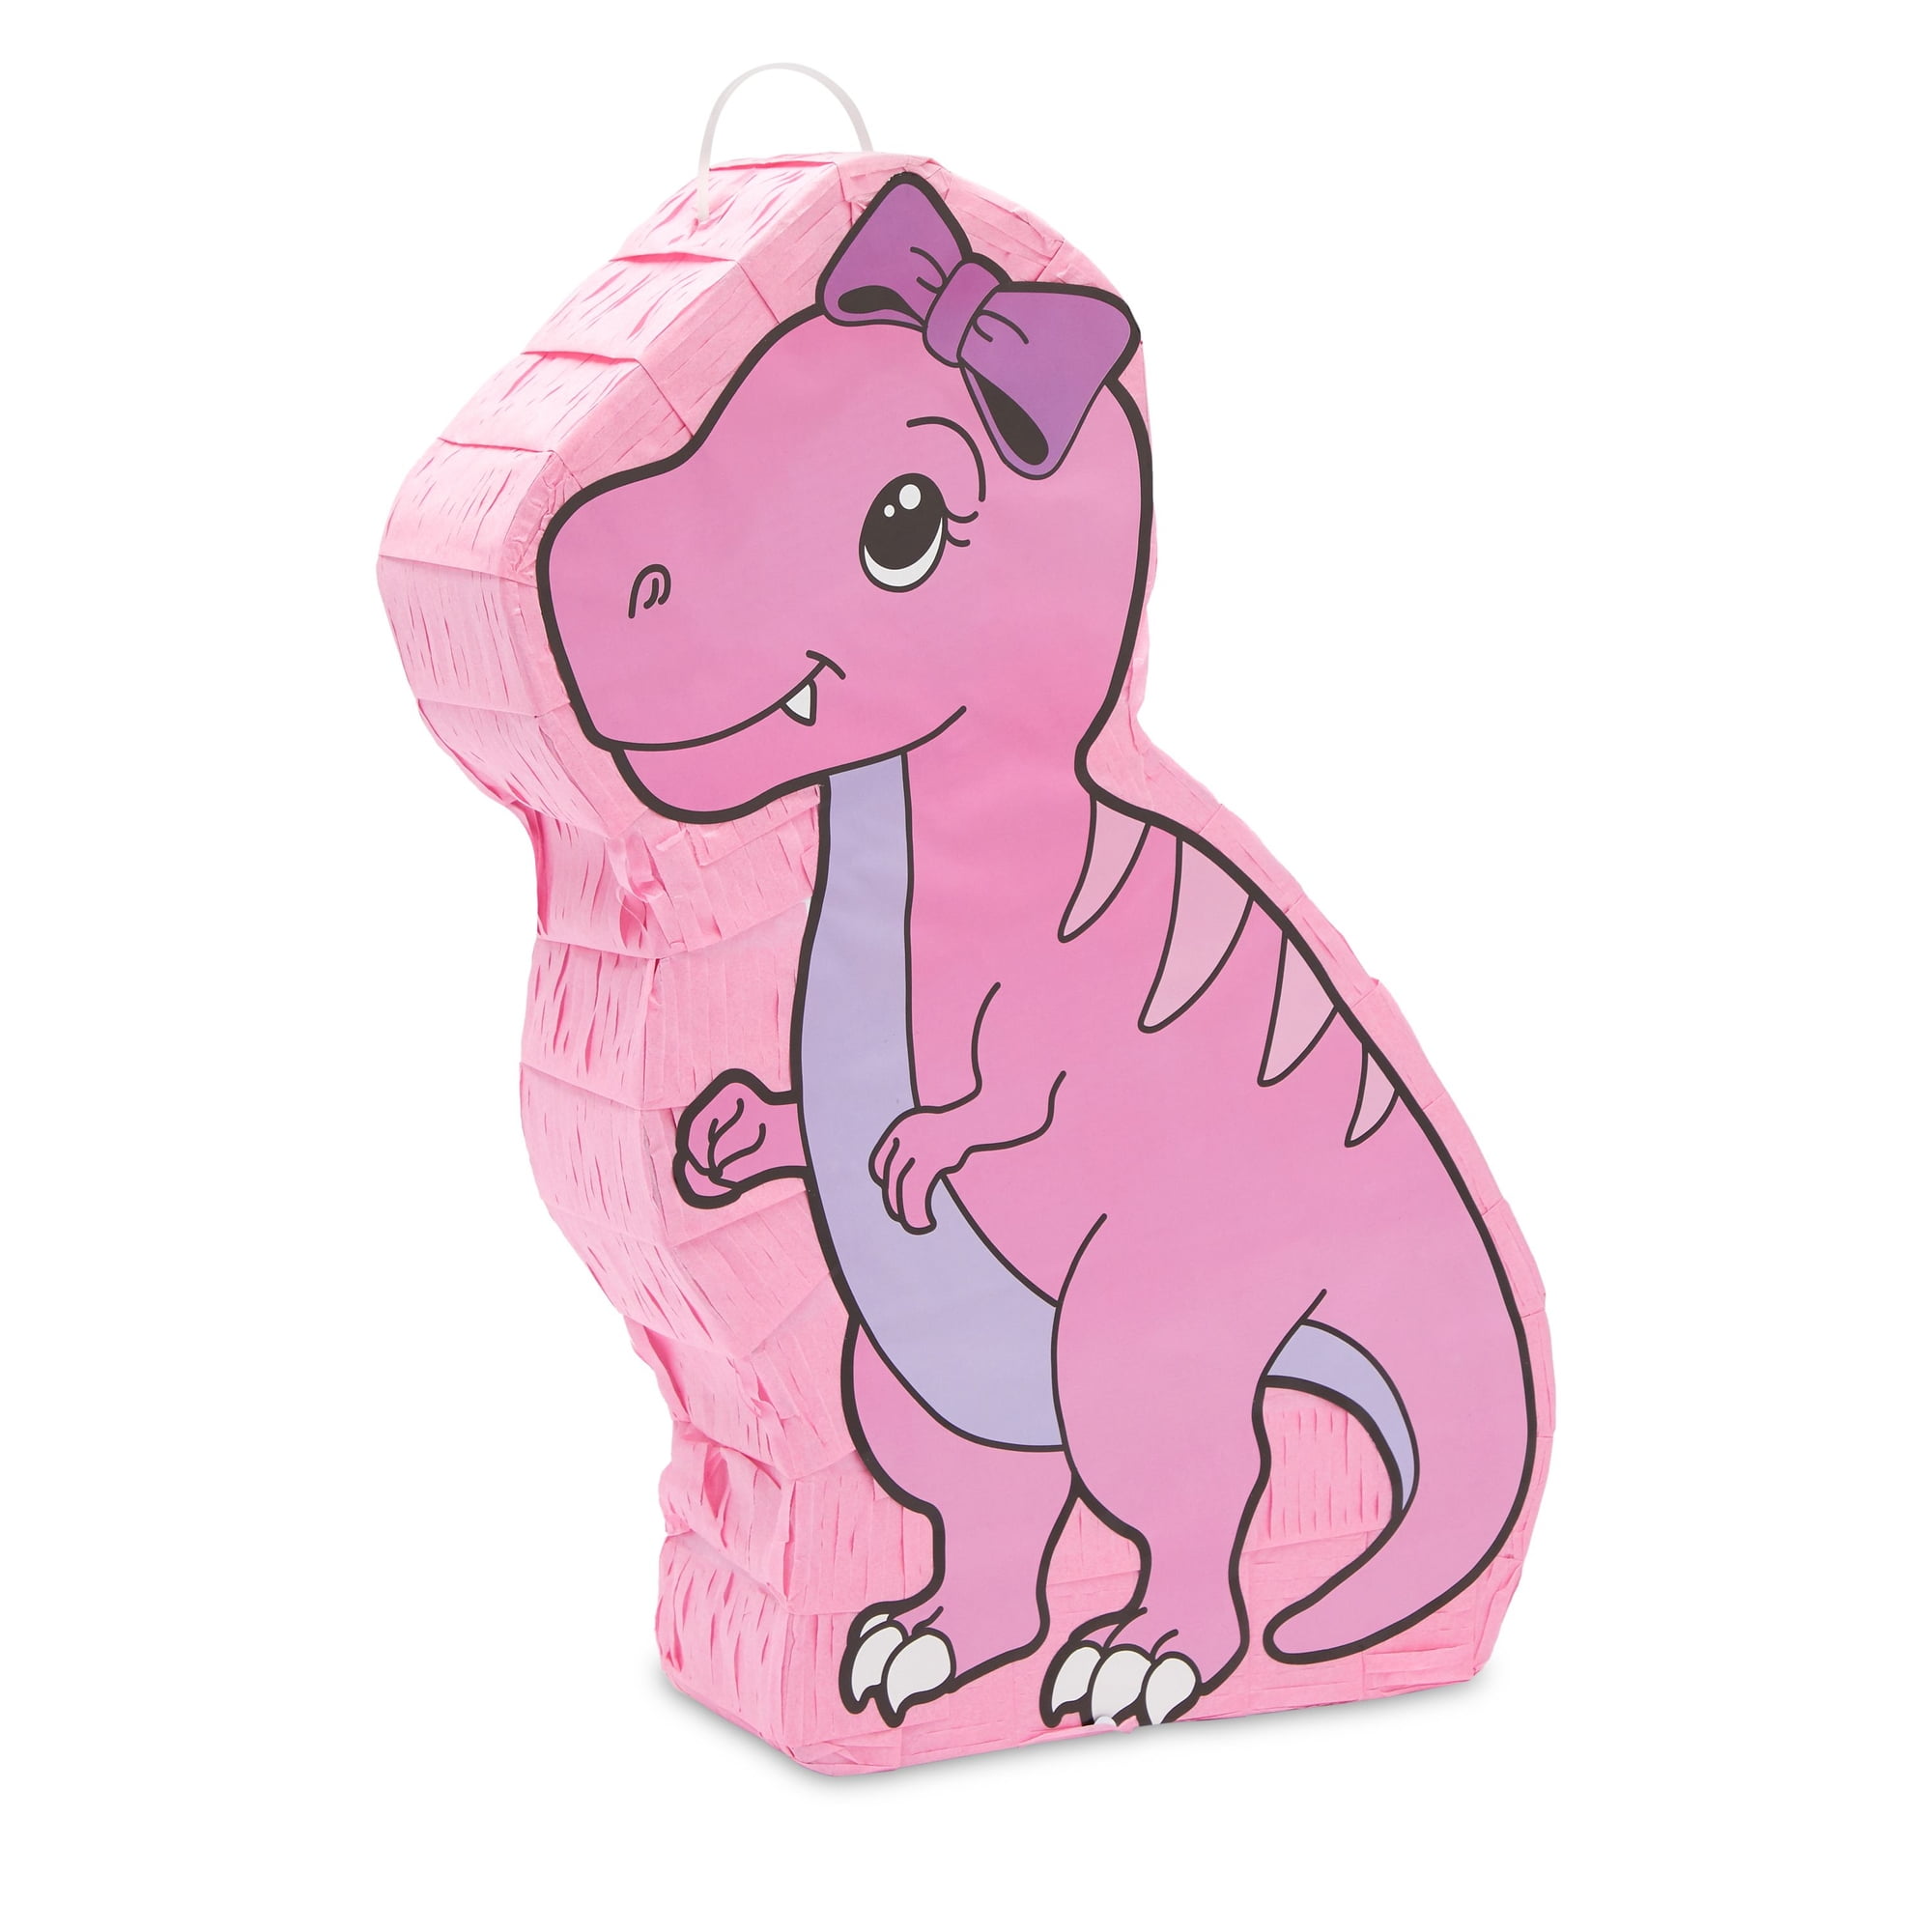 Dinosaur Pinata Pet Dino Fun Game Birthday Party Decoration Kids Candy  Surprises